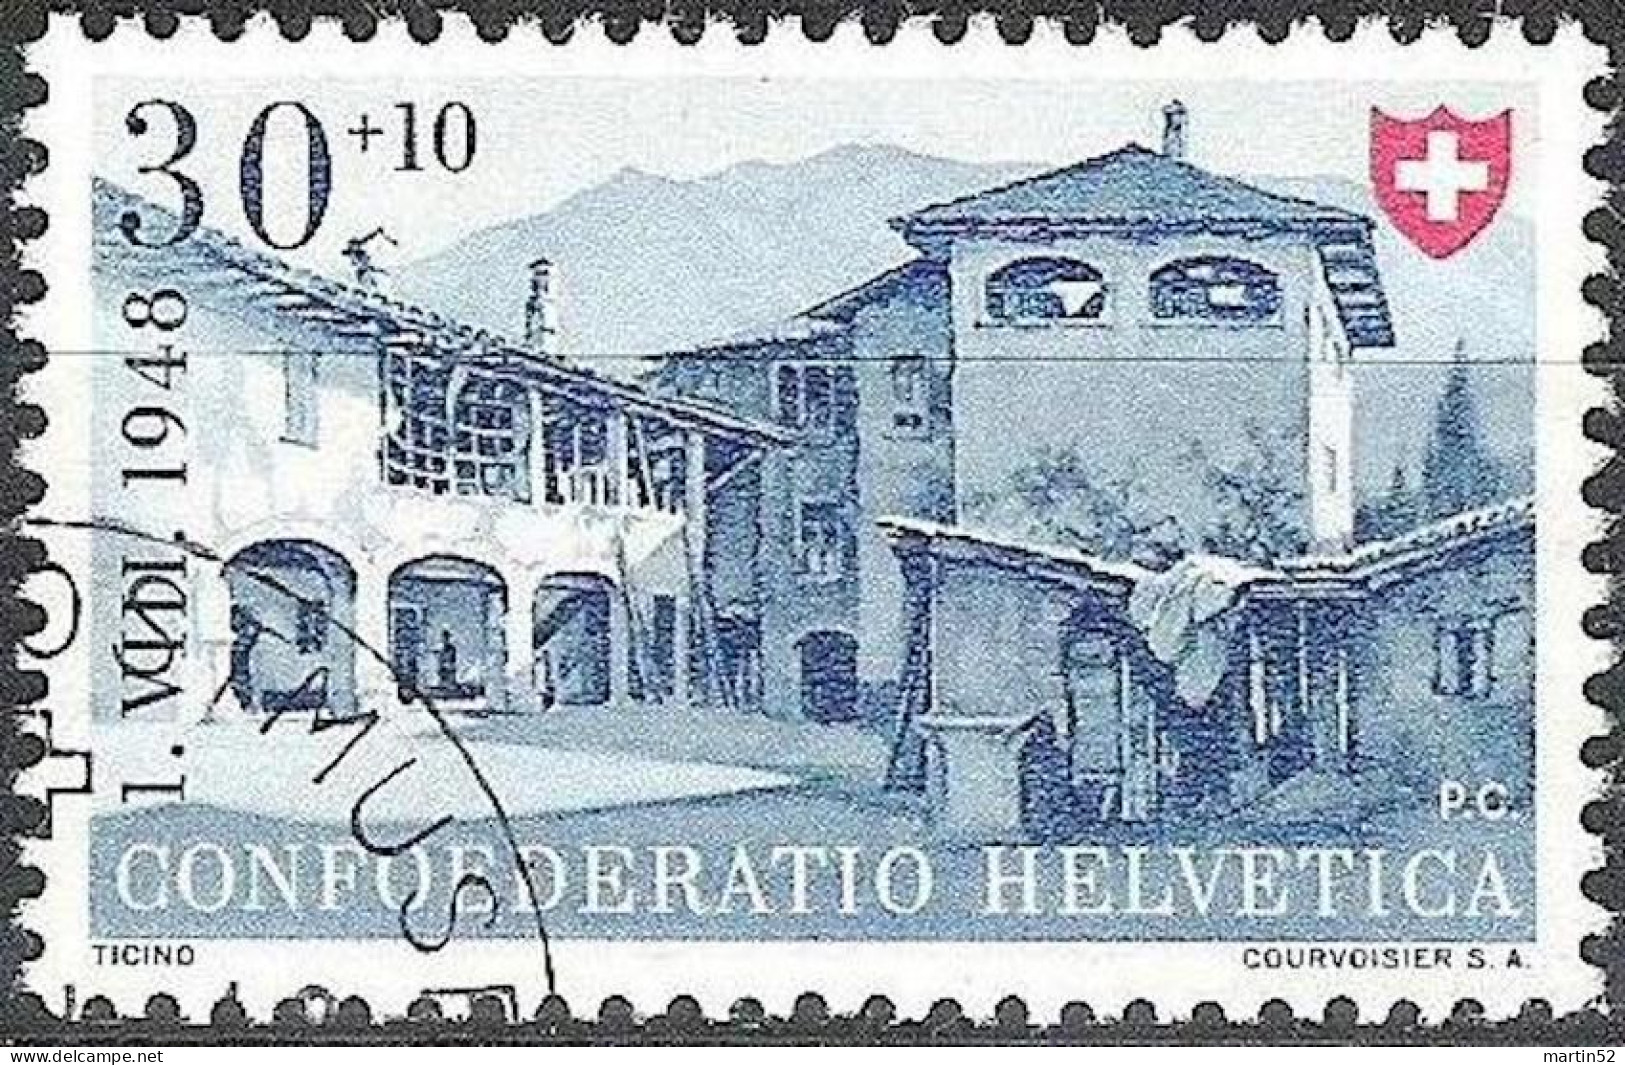 Schweiz Suisse Svizzera Pro Patria 1948: "Ticino Tessin" Zu WII 41 Mi 511 Yv 460 Mit Eck-⊙ POSTMUSEUM A (Zu CHF 13.00) - Used Stamps